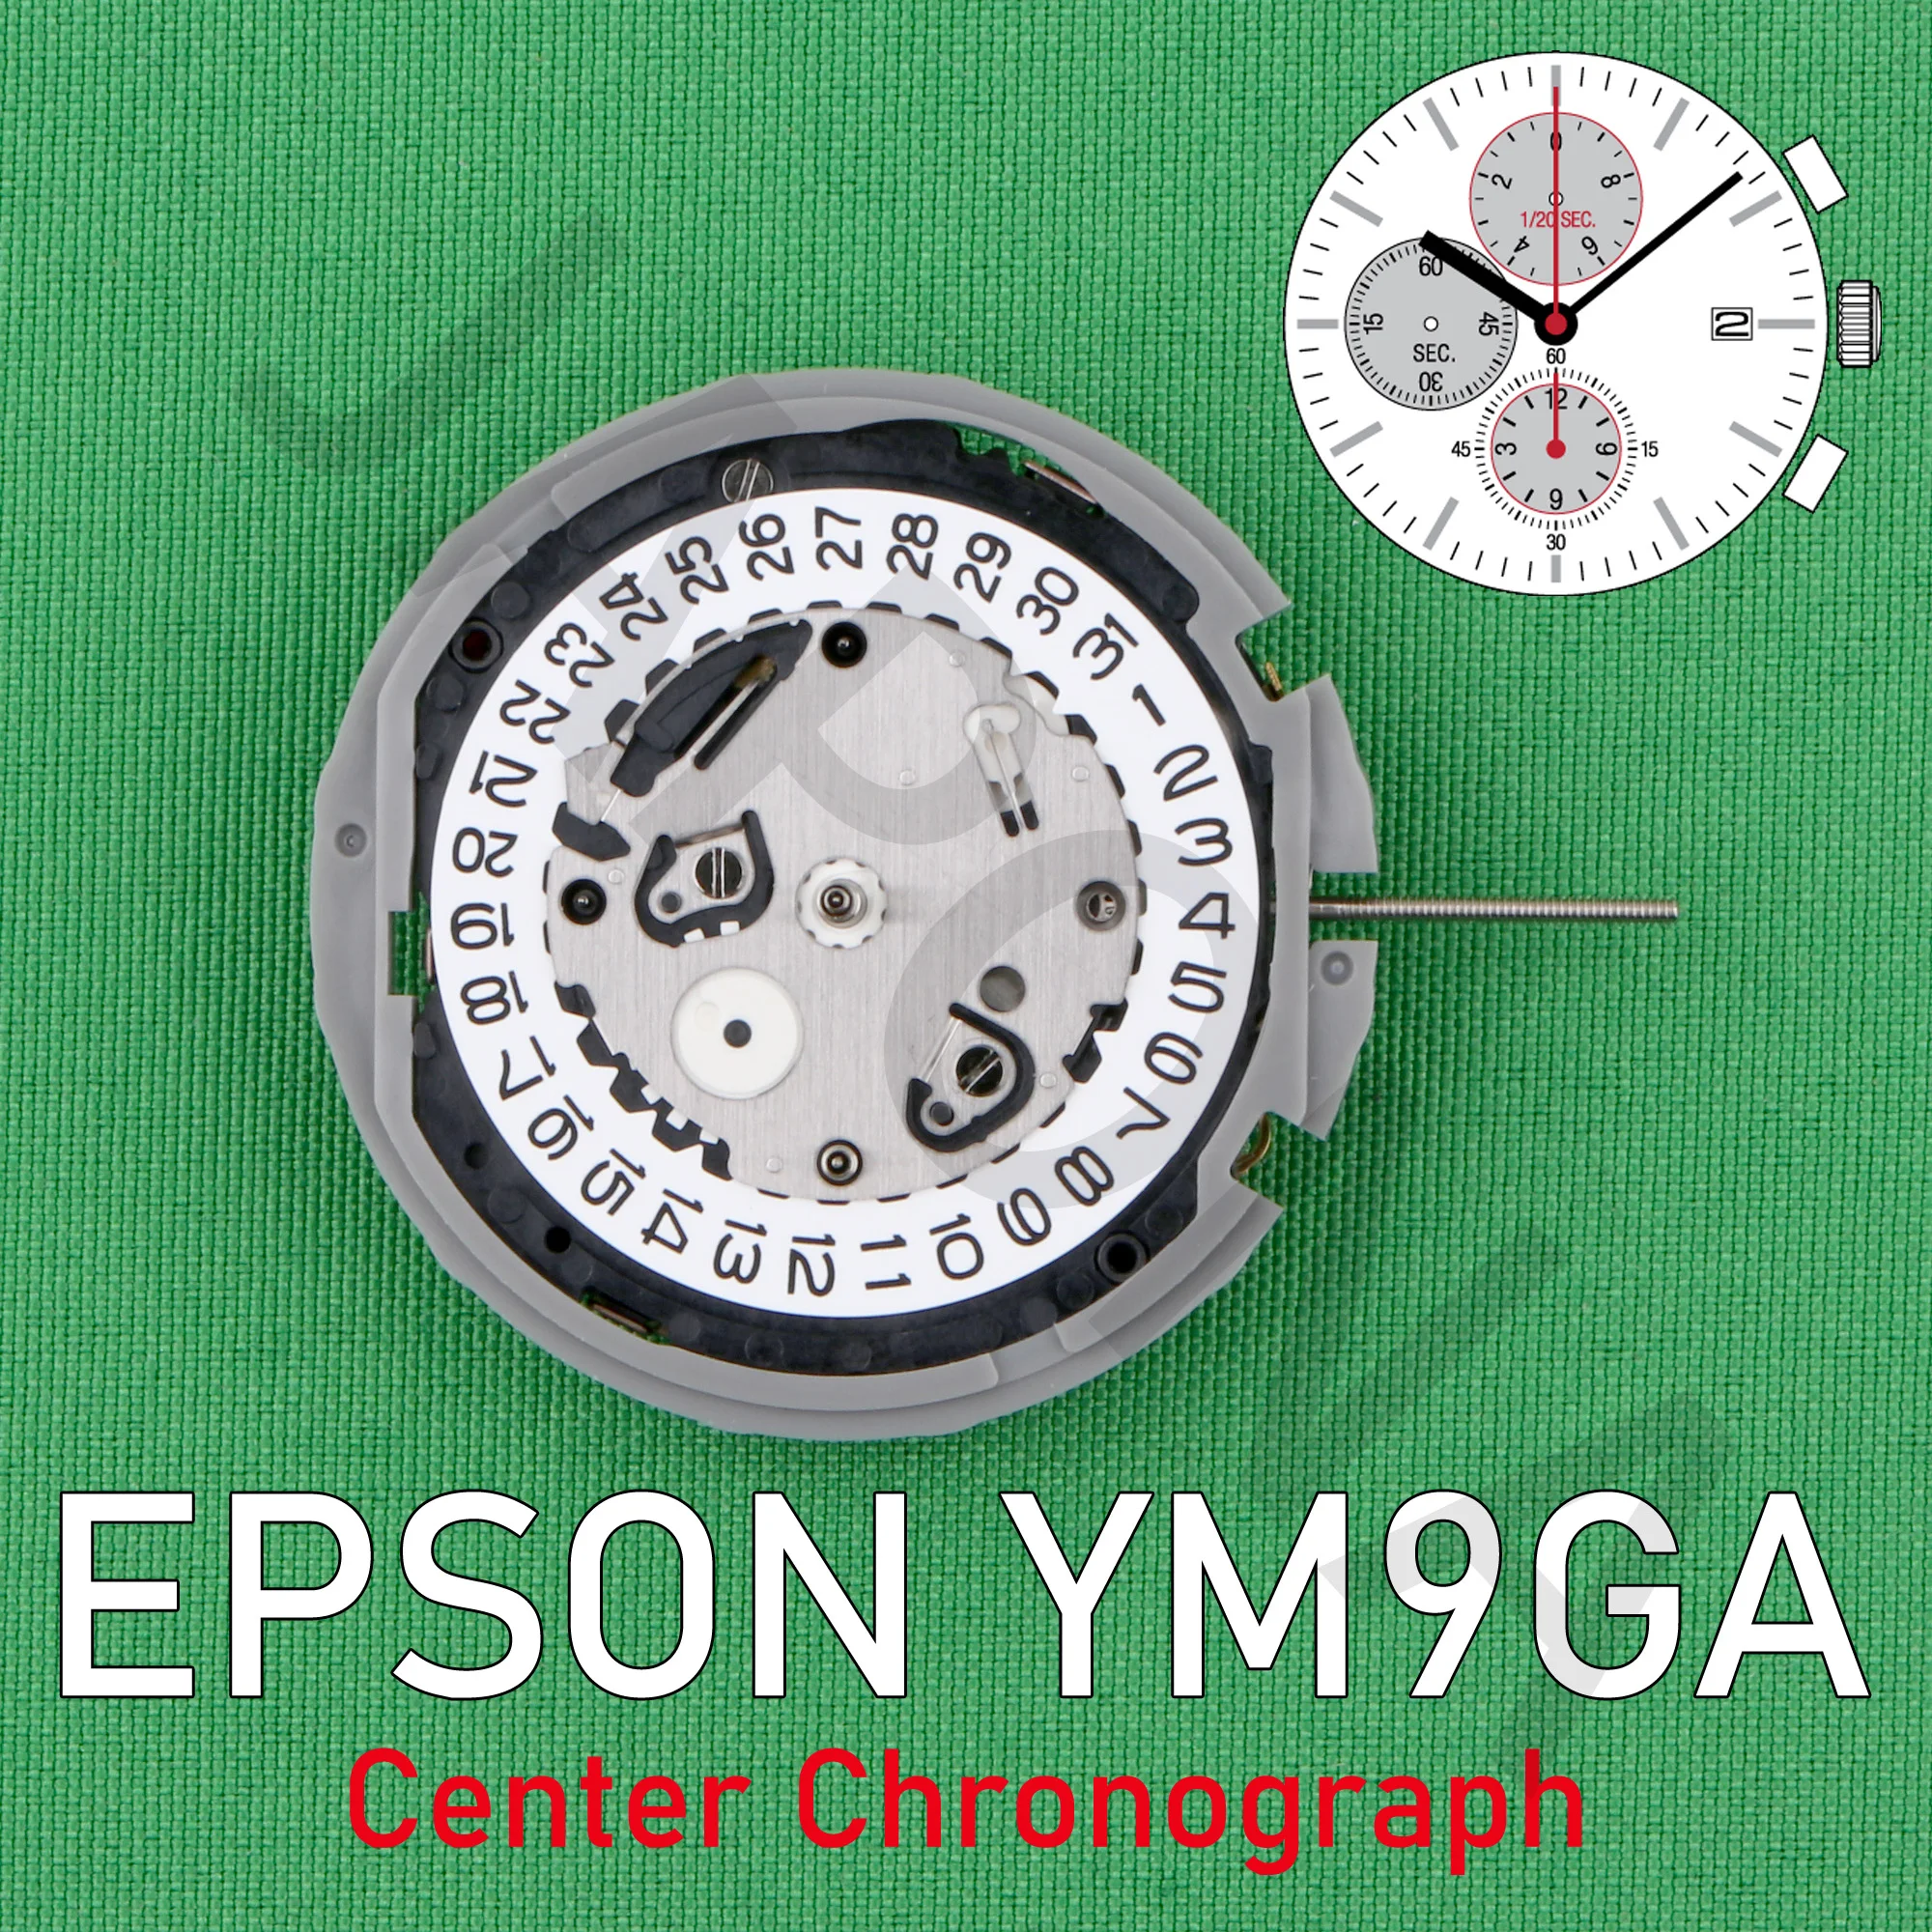 Механизъм YM9G Япония Механизъм EPSON YM9GA малки стрелки на 6.9.12 Аналогов кварцов 12-инчов централен секунди хронограф Изображение 0